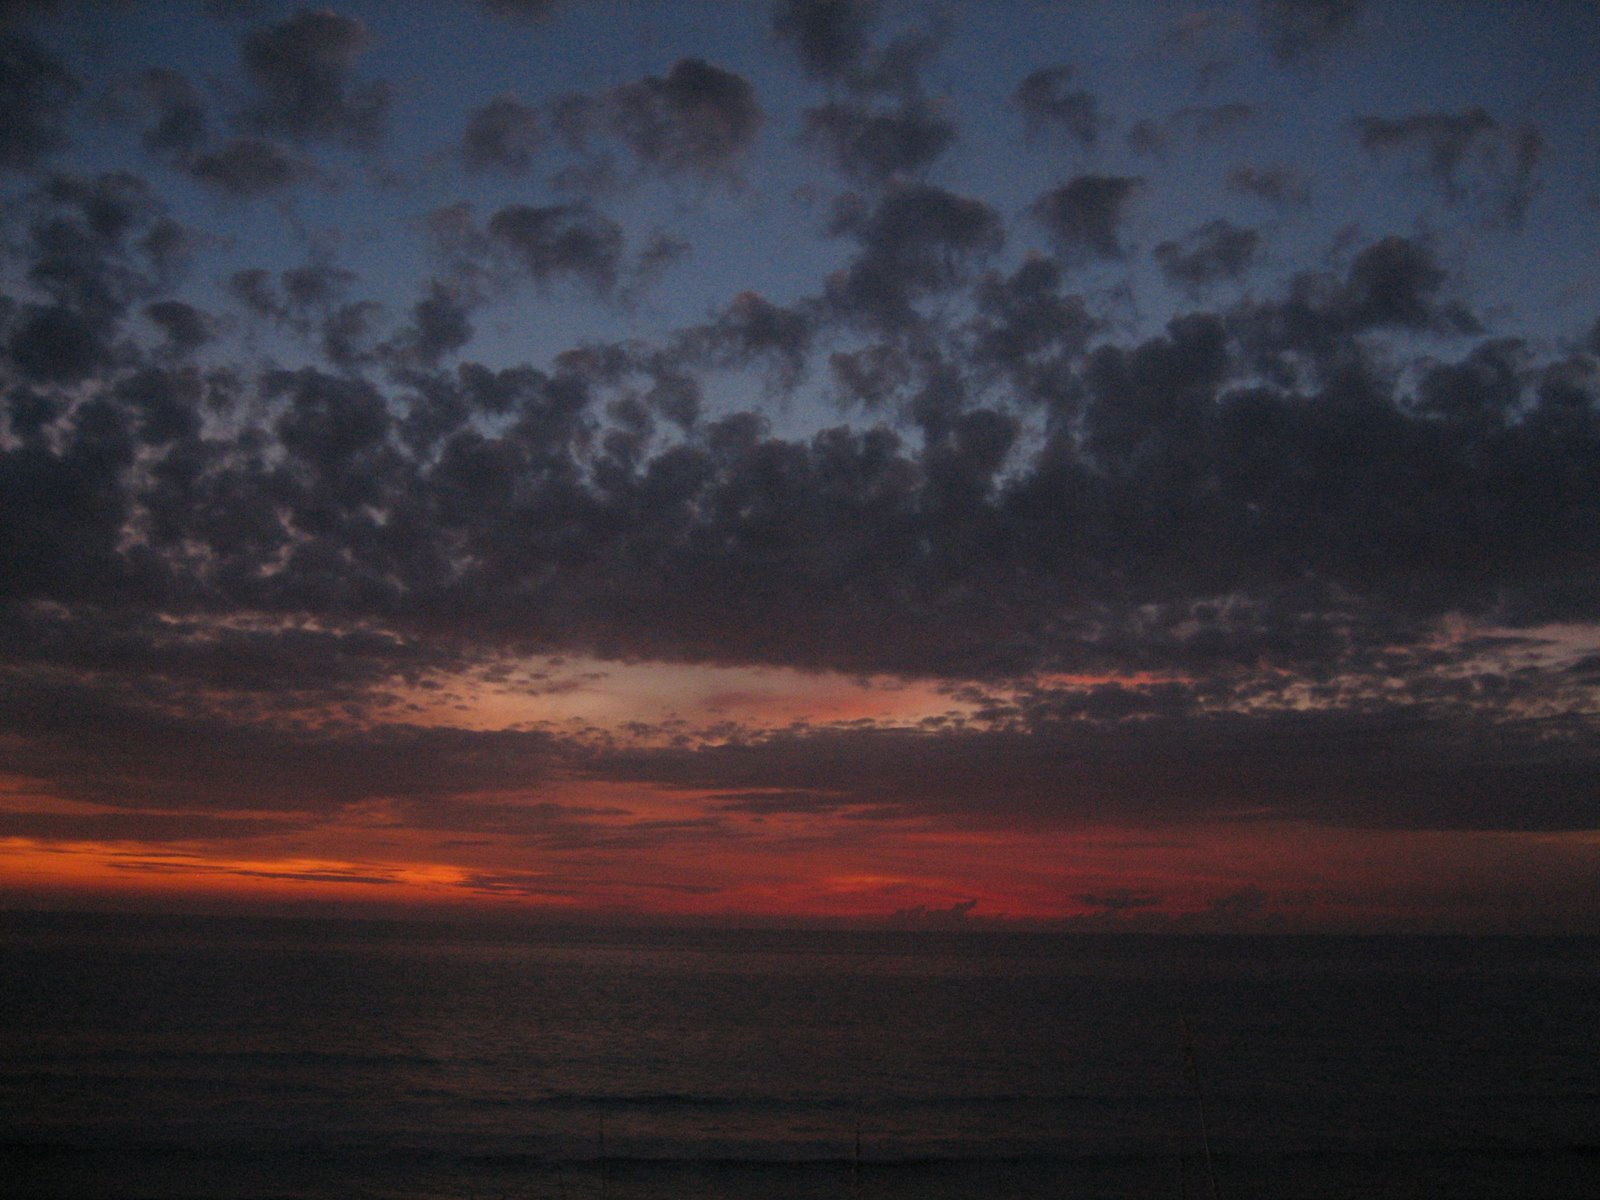 Spectacular Casey Key sunset in FL